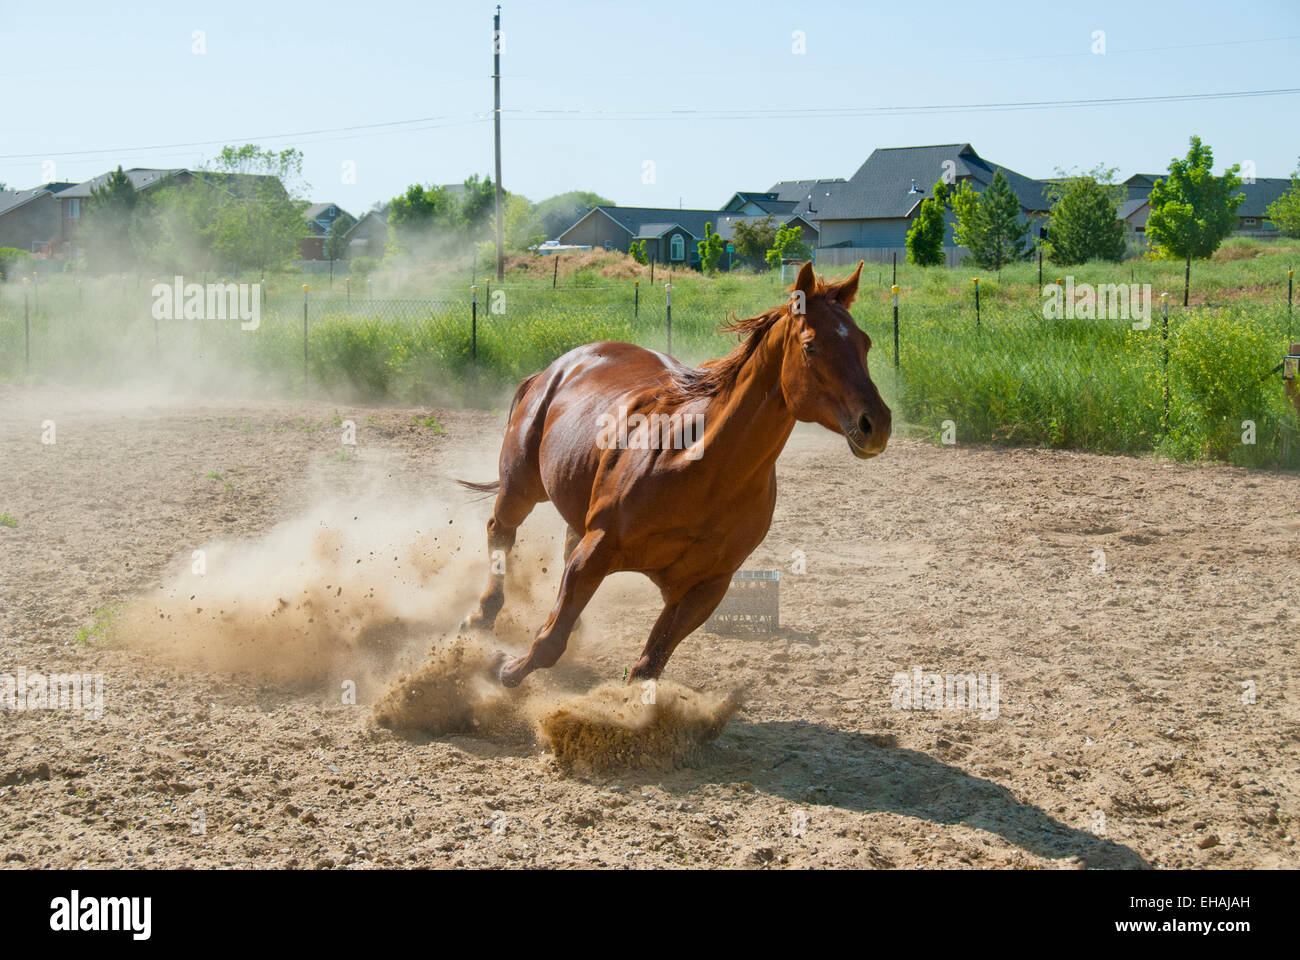 American quarter horse running Stock Photo